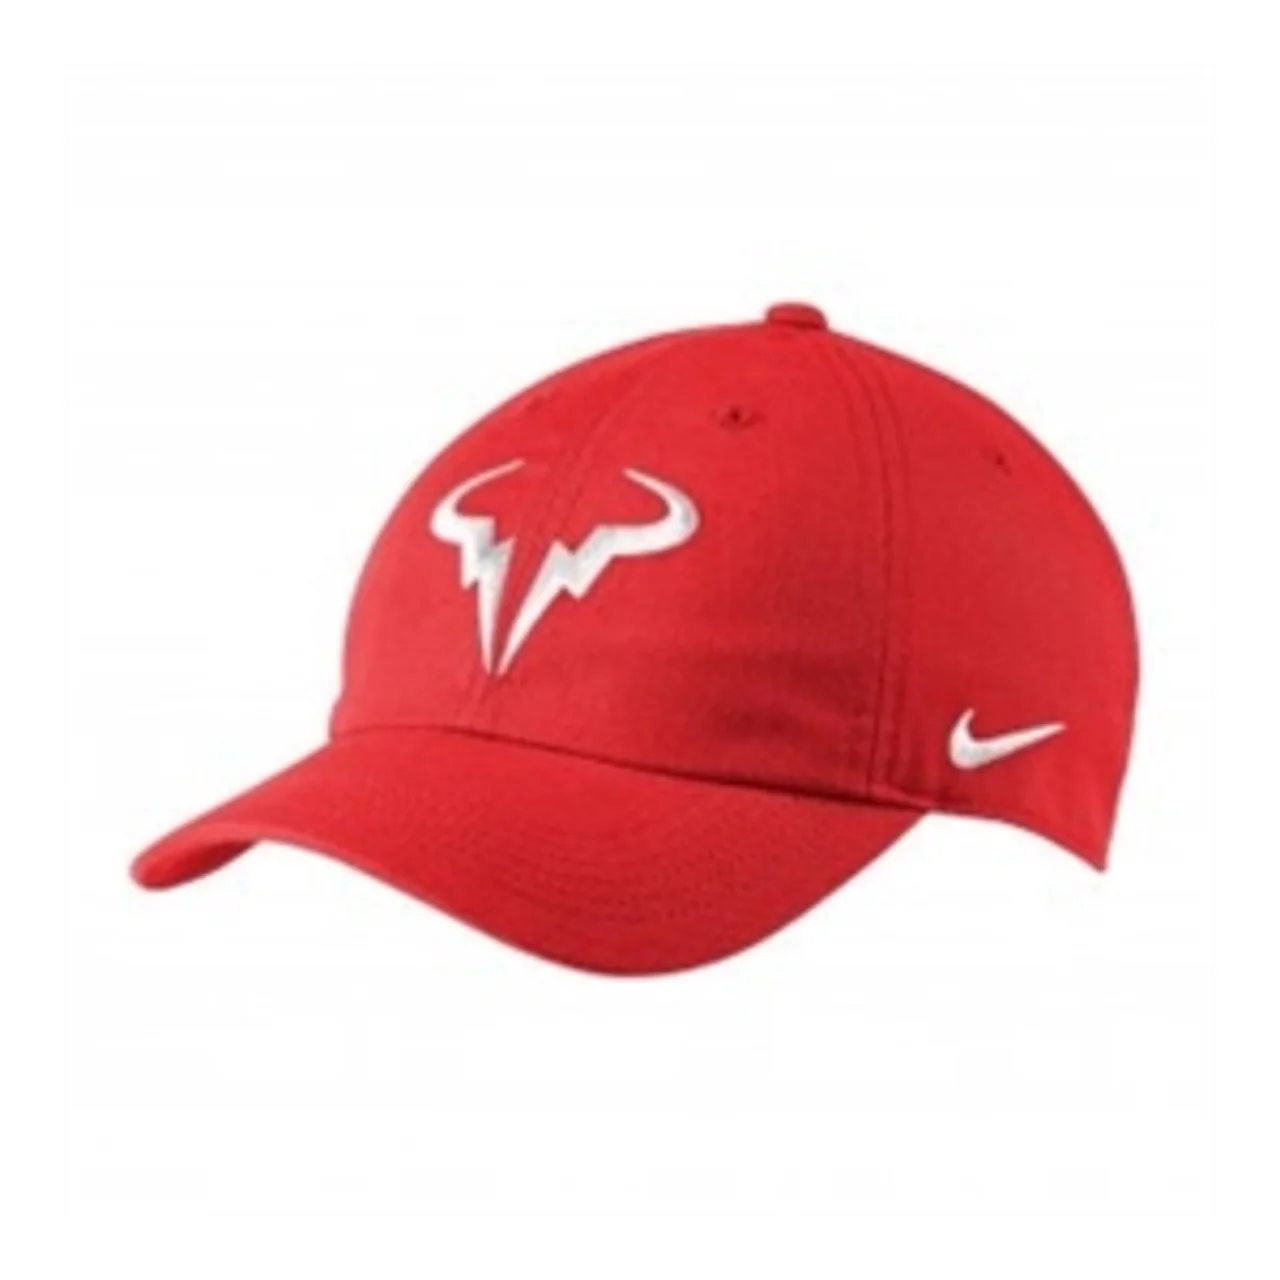 Nike Aerobill Rafa Cap Red